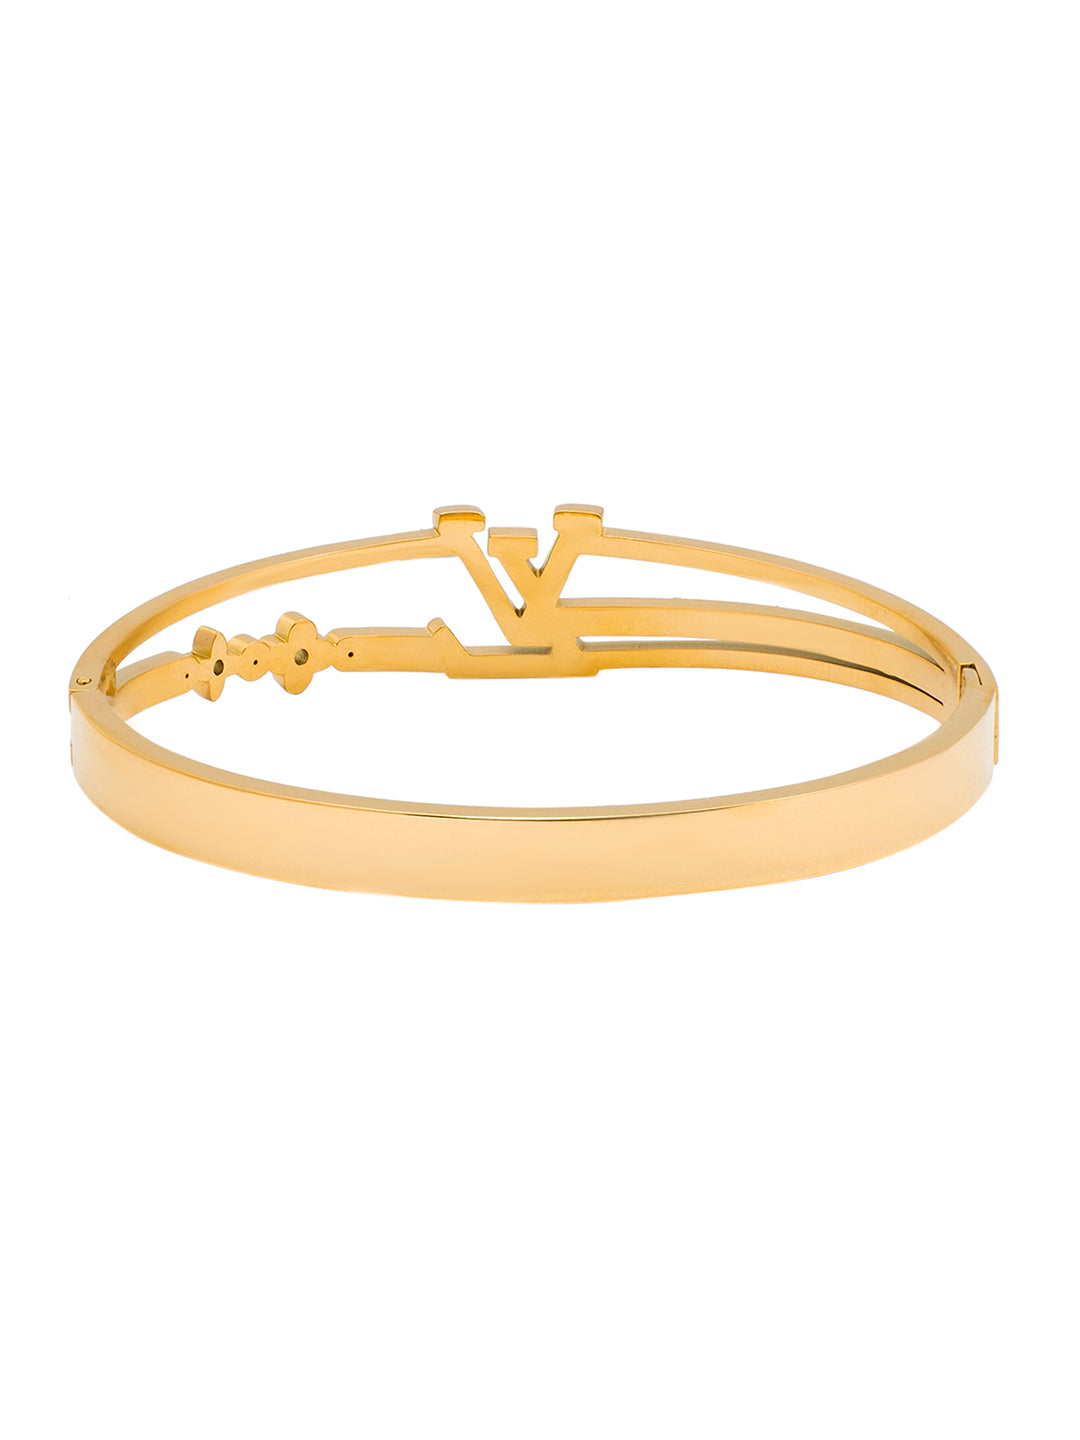 Louis Vuitton Costume Gold Plated Charm Bracelet